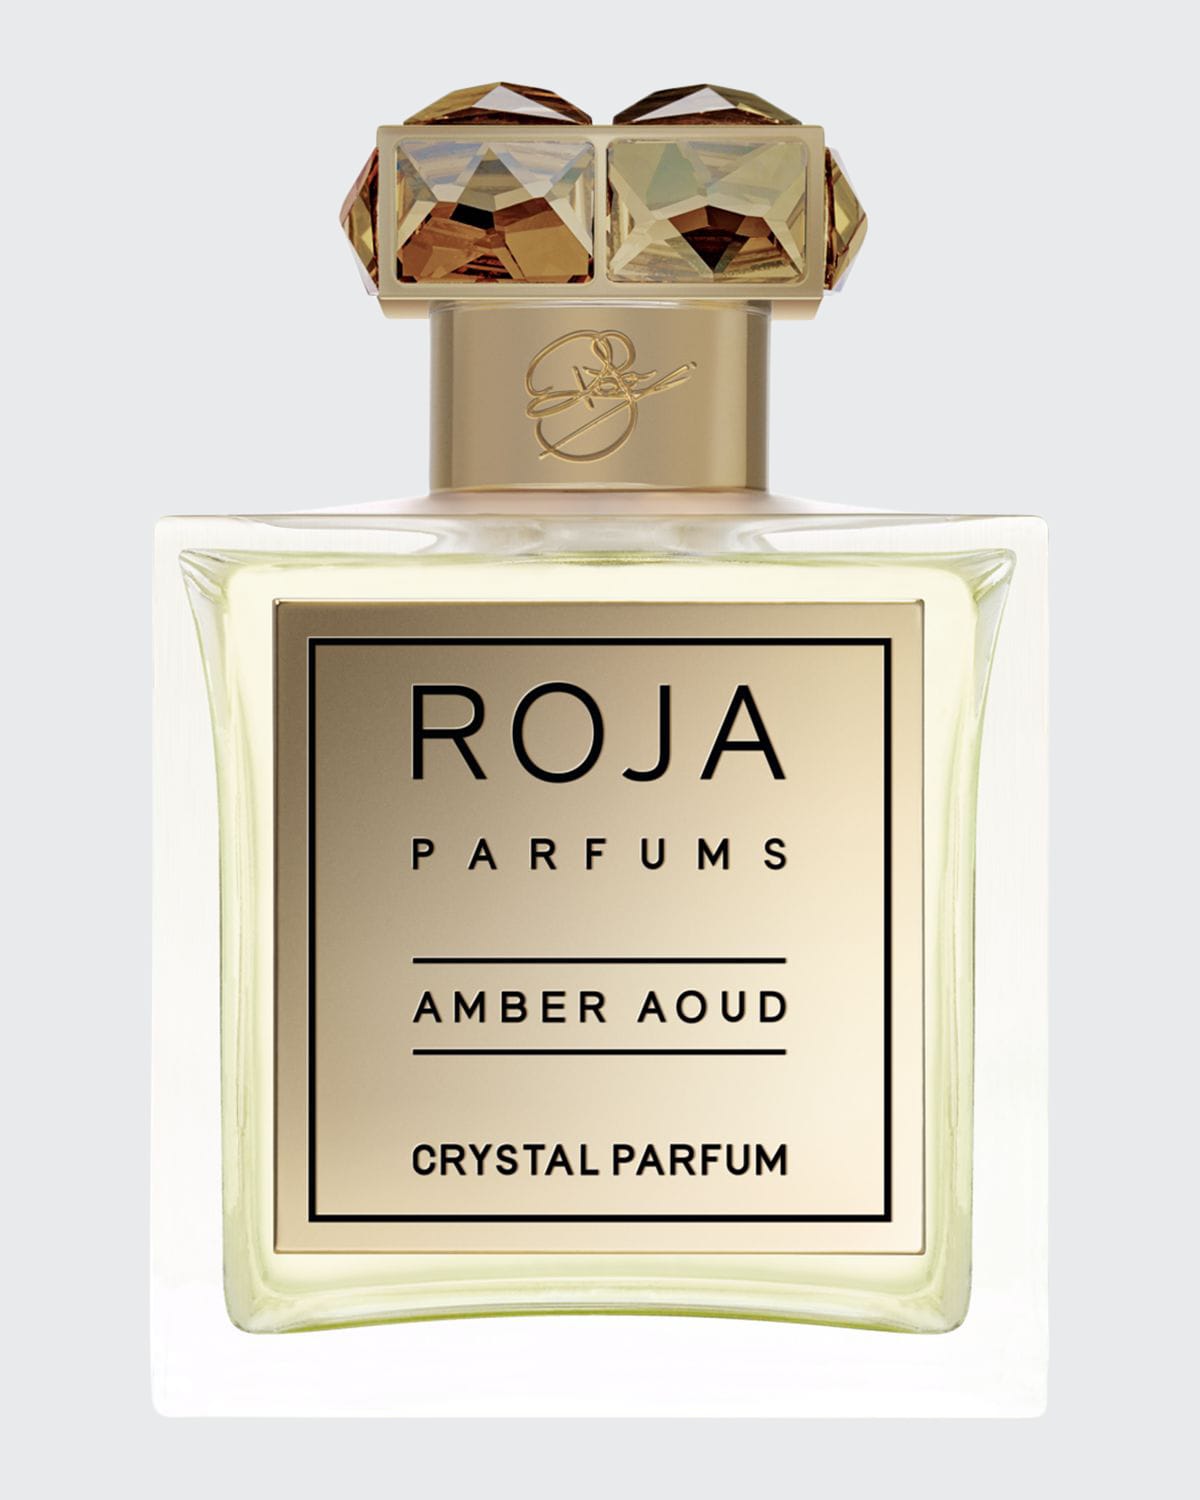 Amber Aoud Crystal Parfum, 3.4 oz.